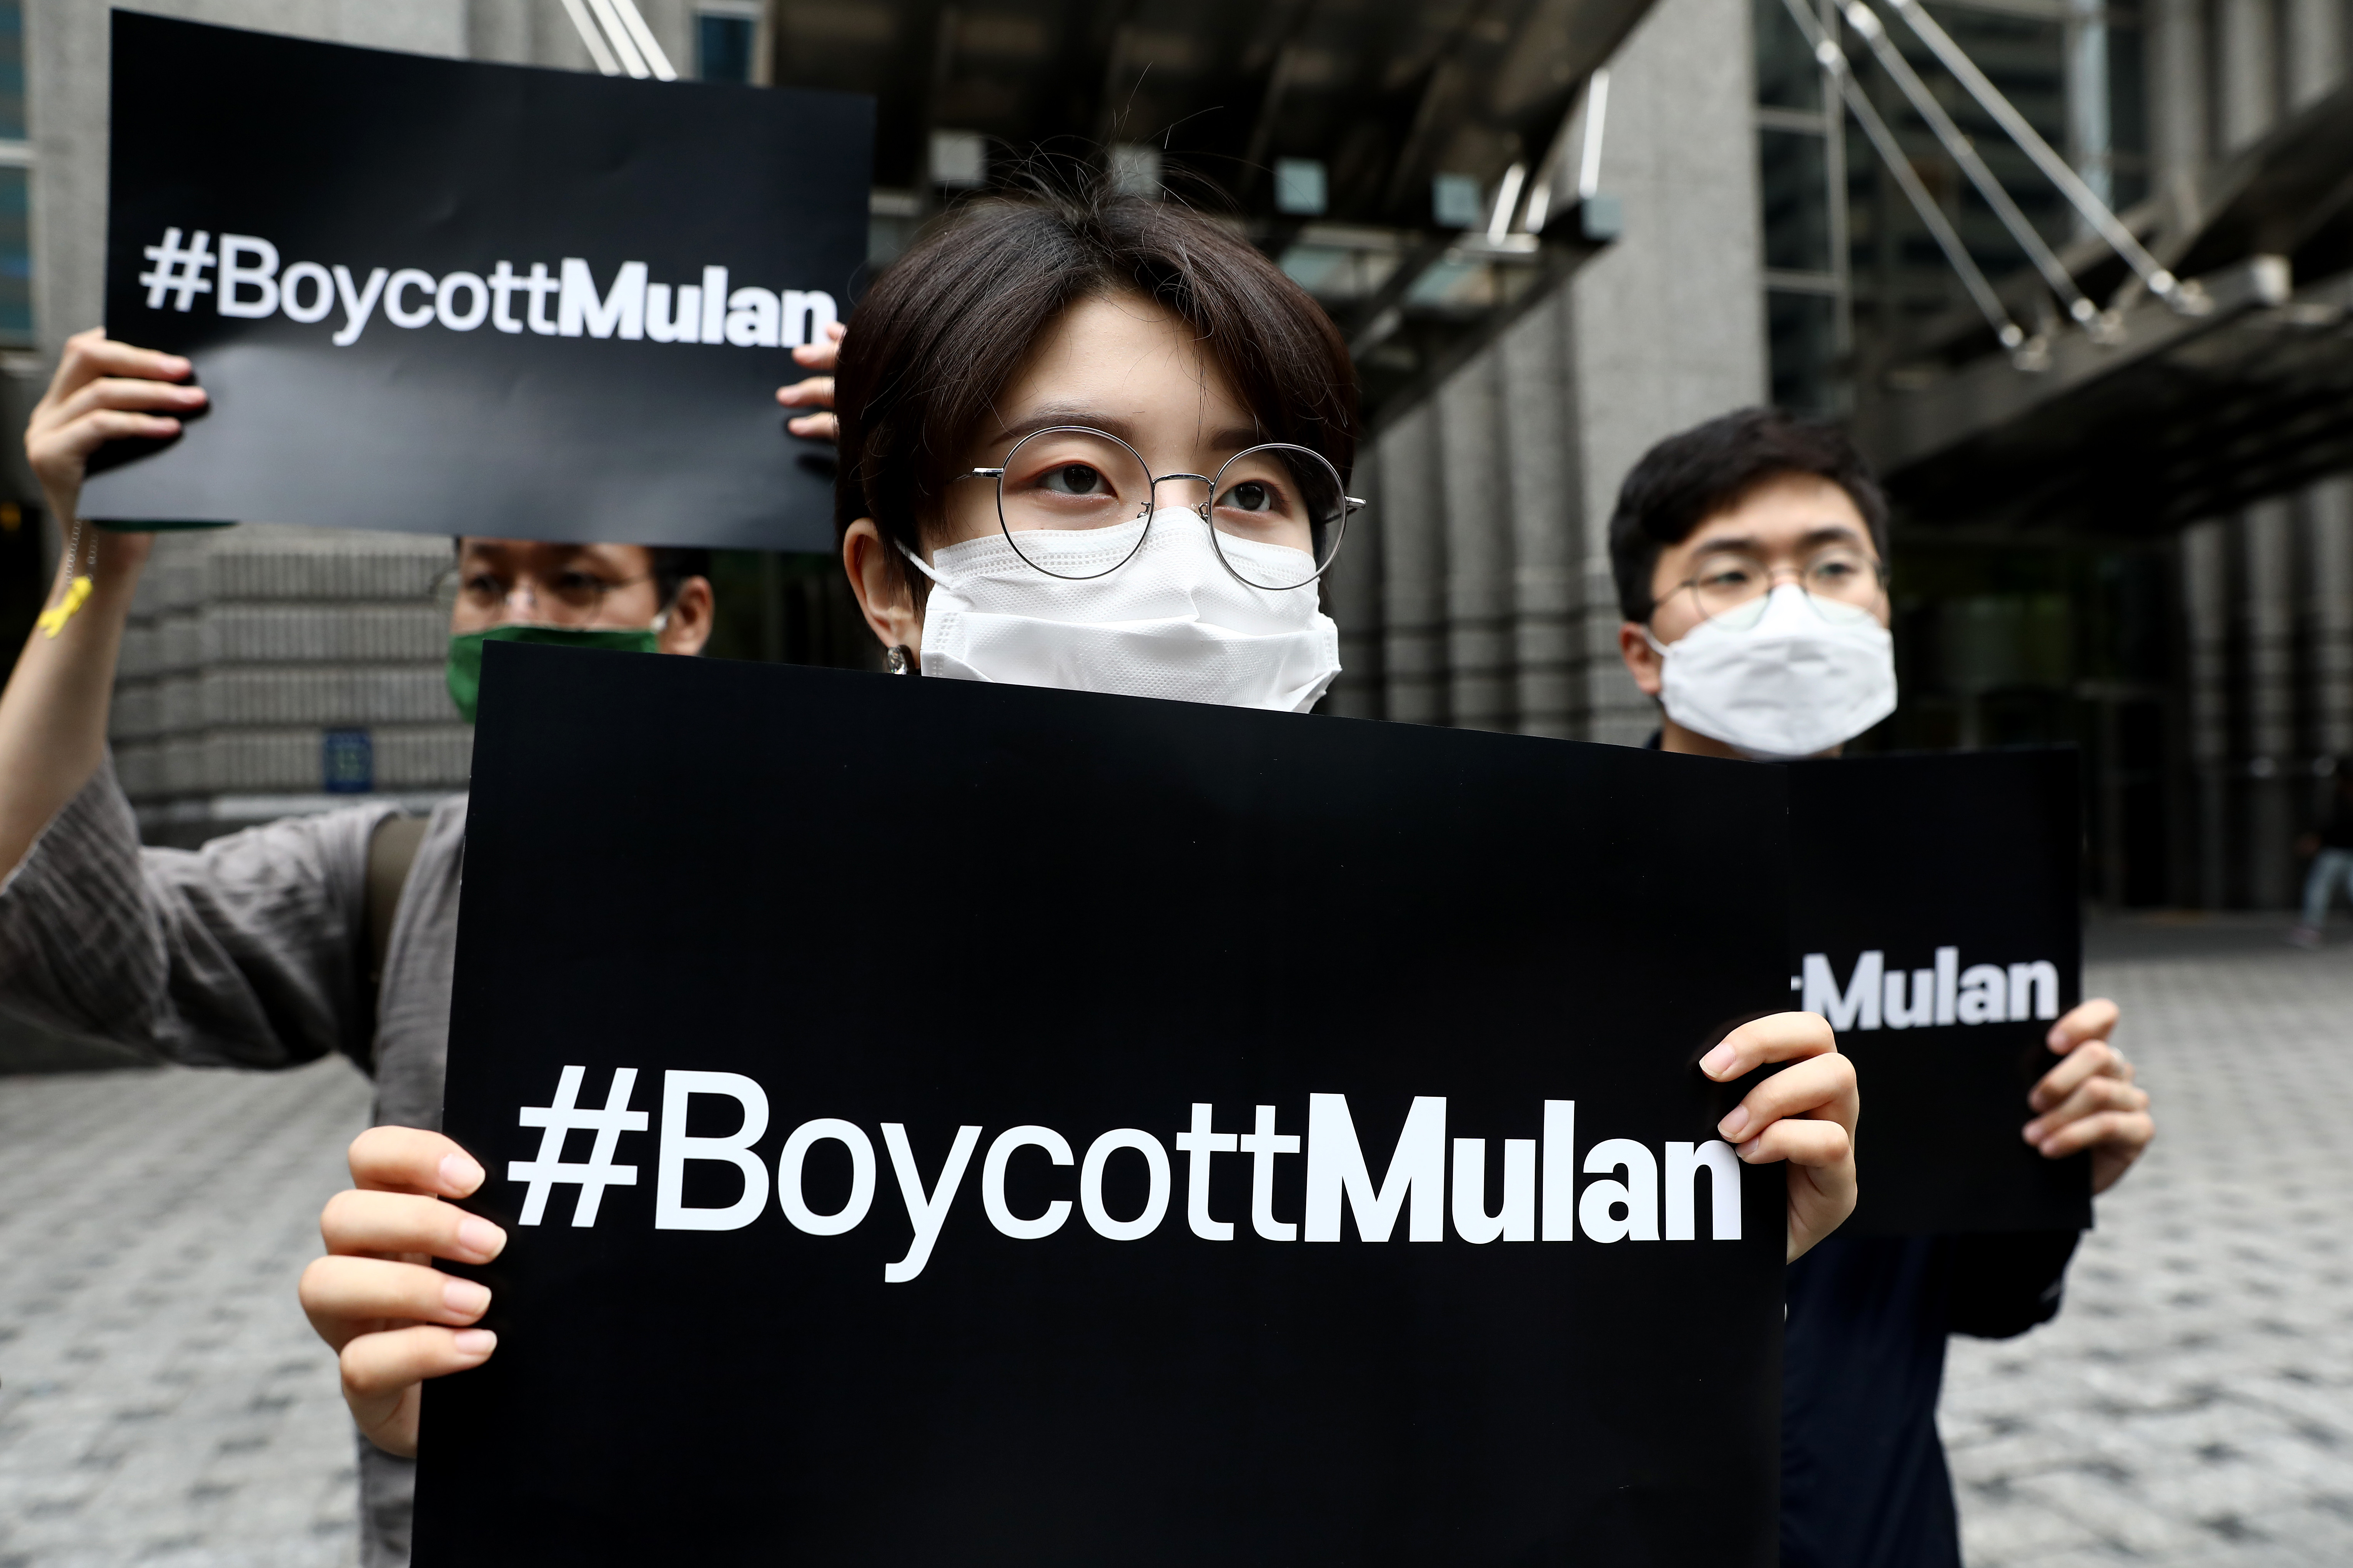 #BoycottMulan Movement Starts In Response To Lead Actress’ Stance On Hong Kong